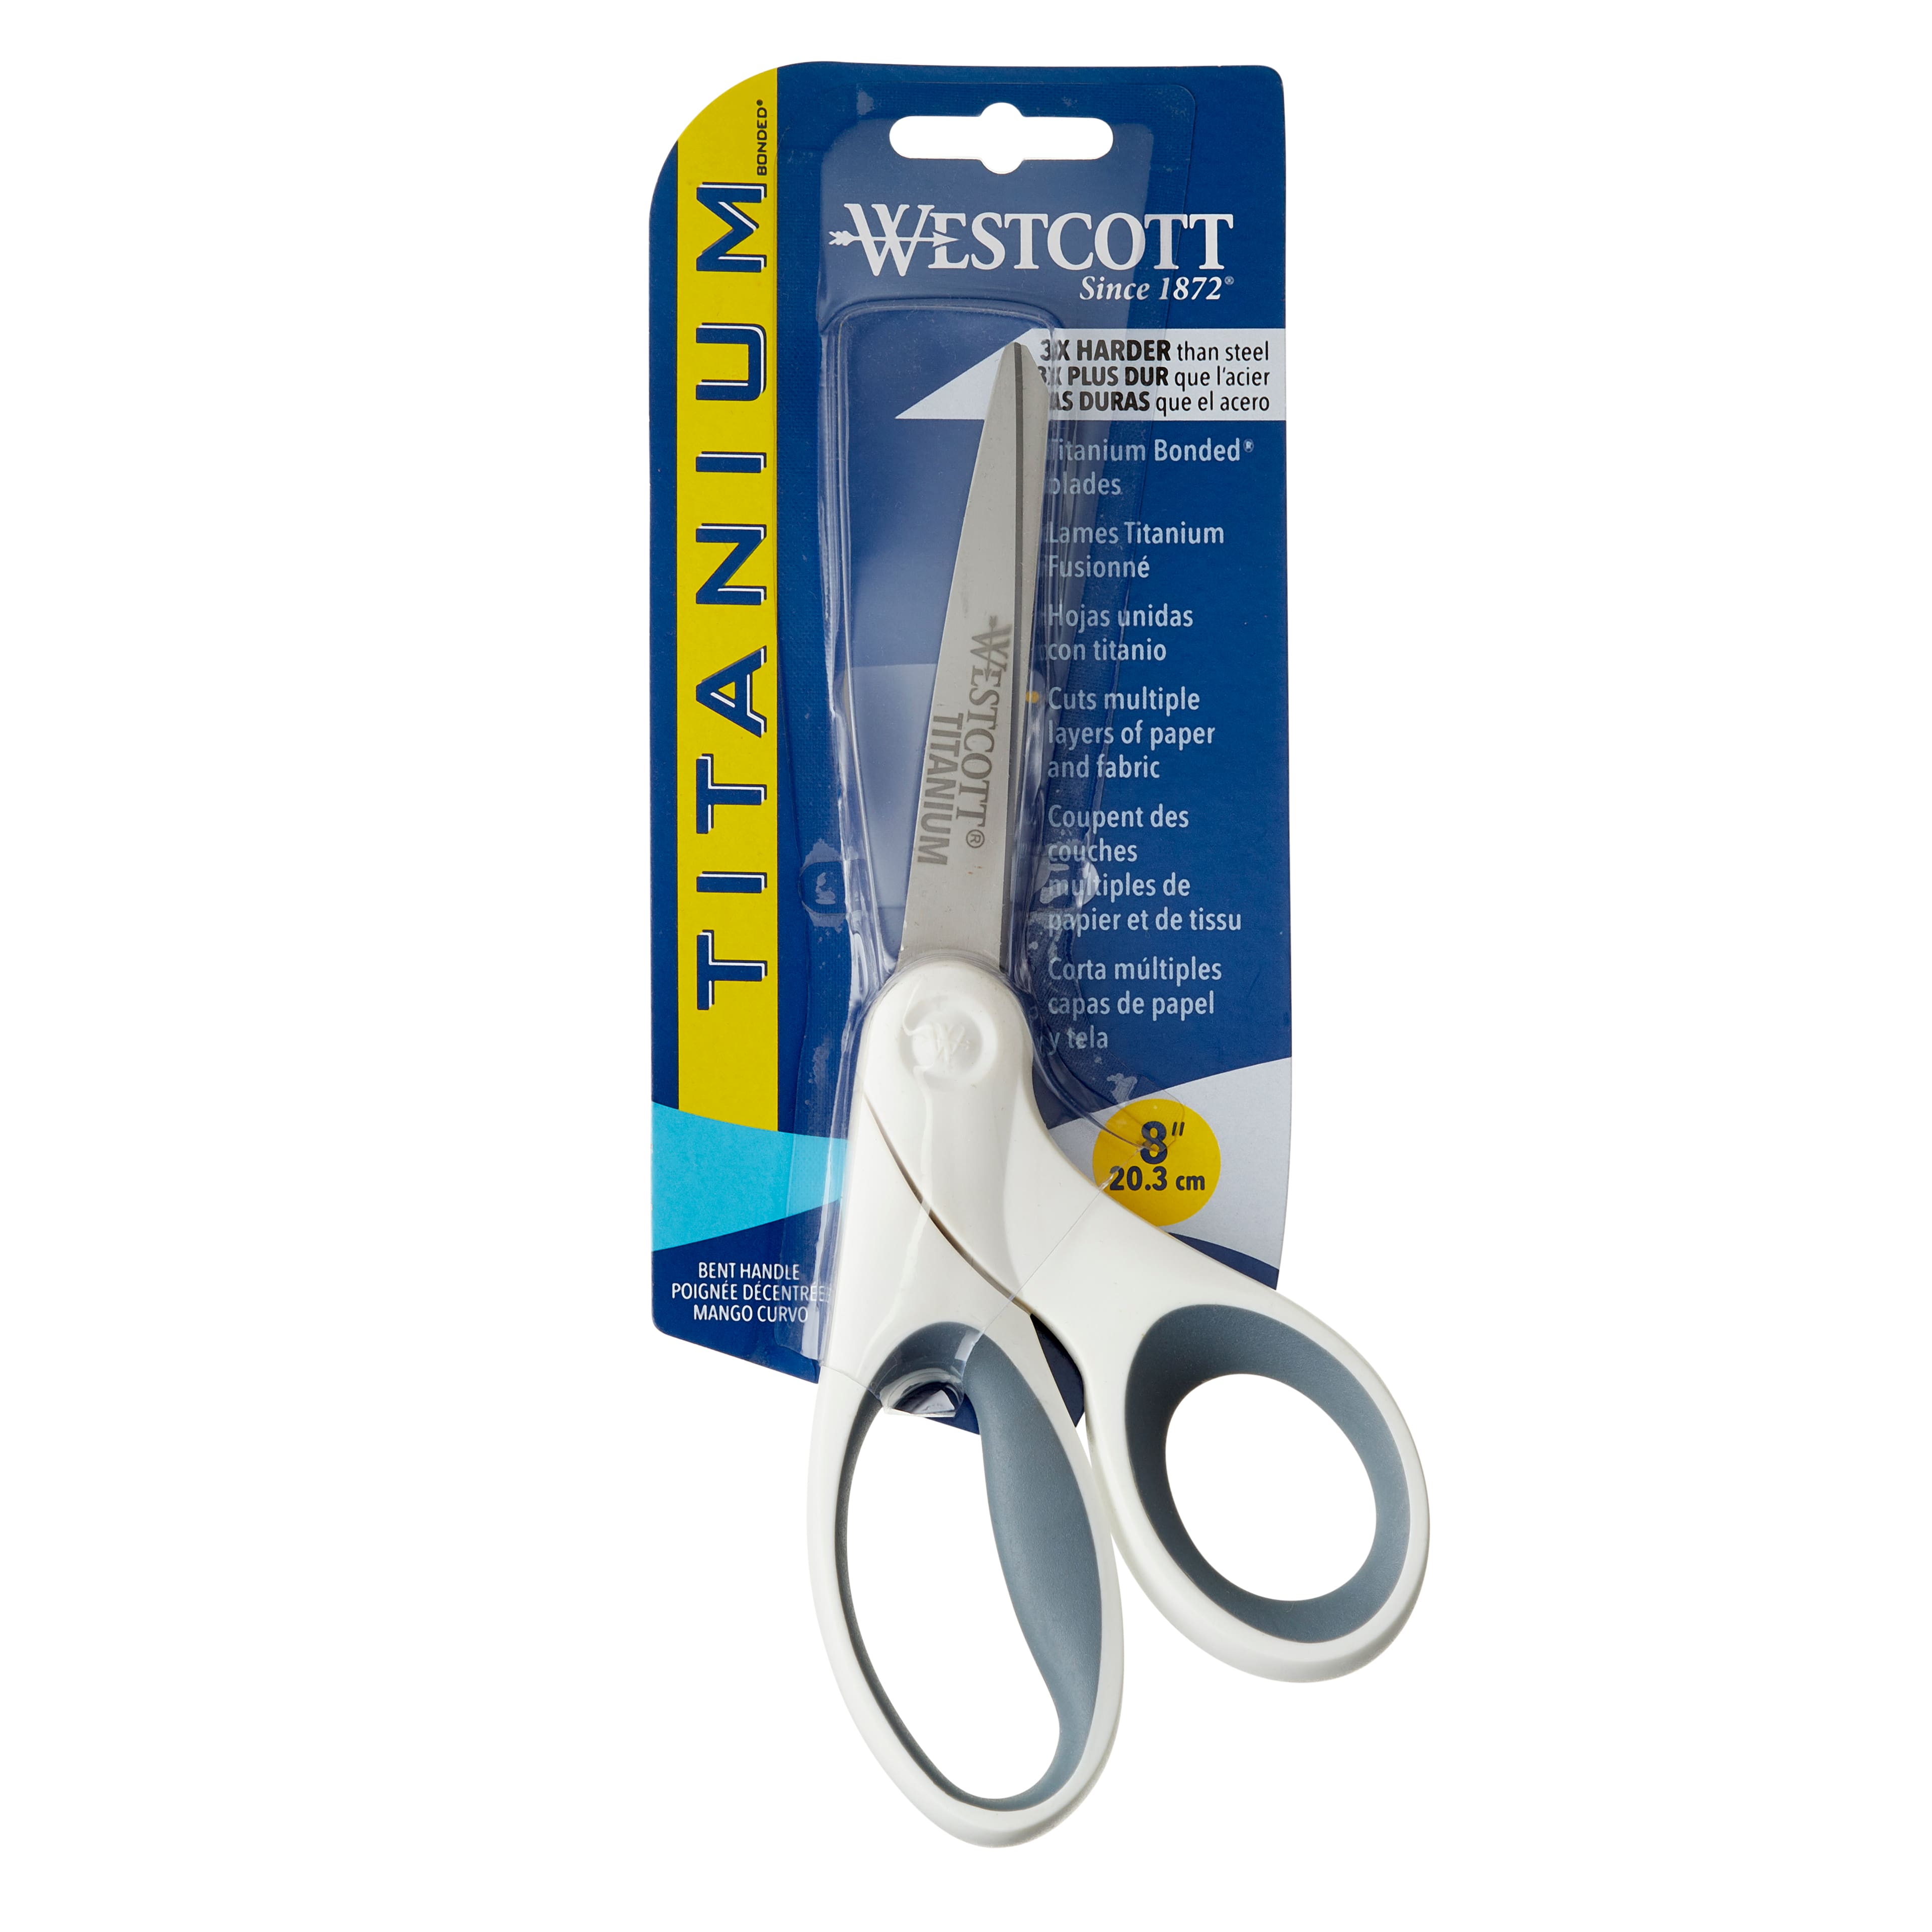 Westcott Titanium Craft Scissors - 2 Pack, 1 ct - Fred Meyer